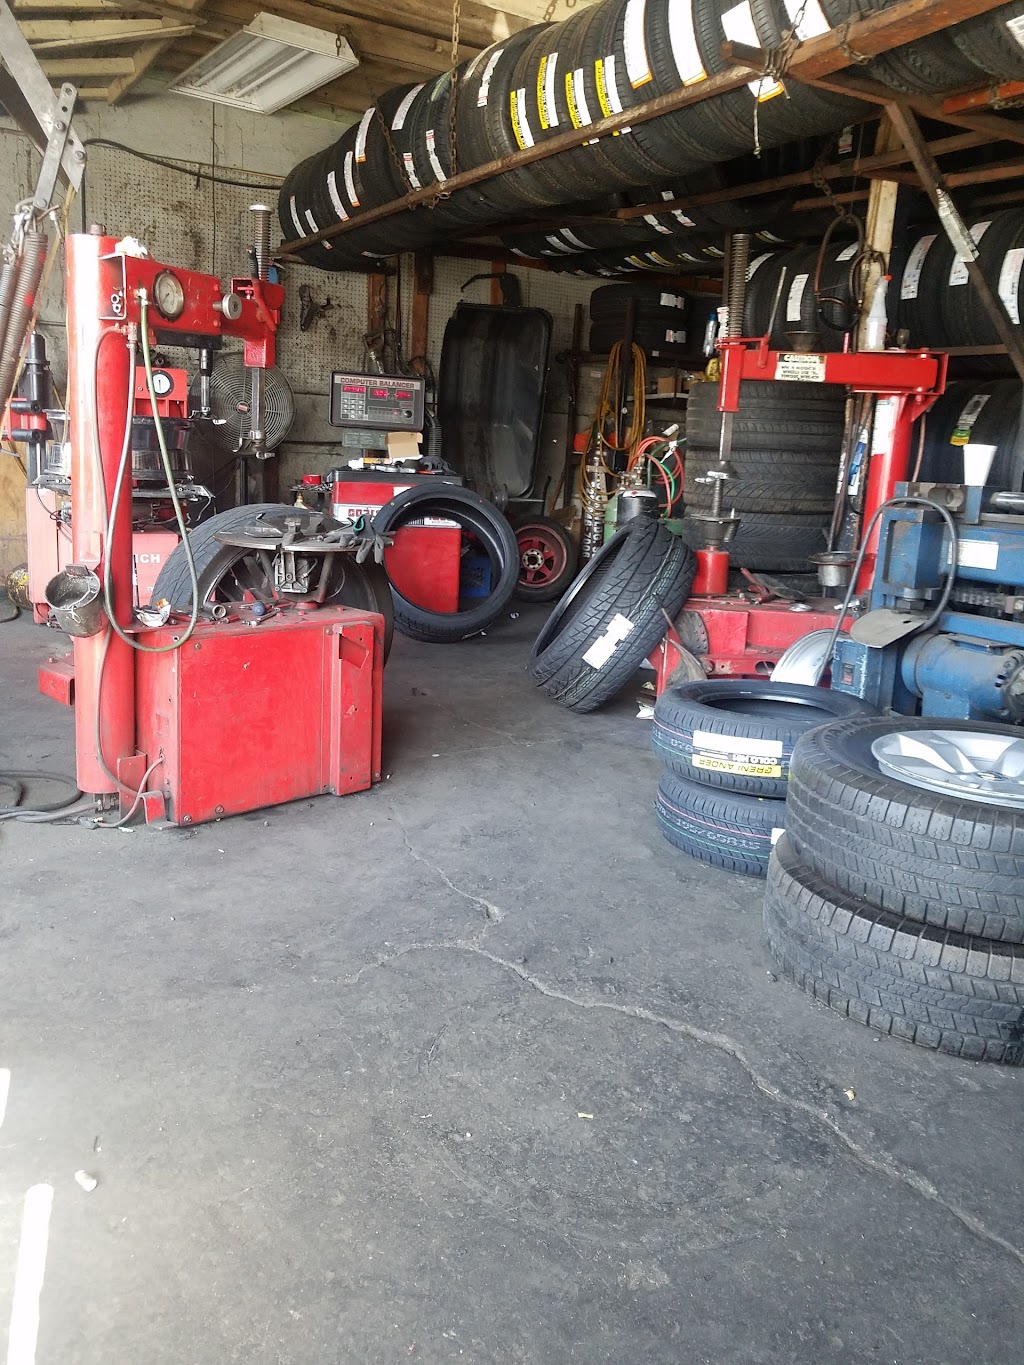 Diaz Tire Shop | 1613 Firestone Blvd, Los Angeles, CA 90001, USA | Phone: (323) 582-2474